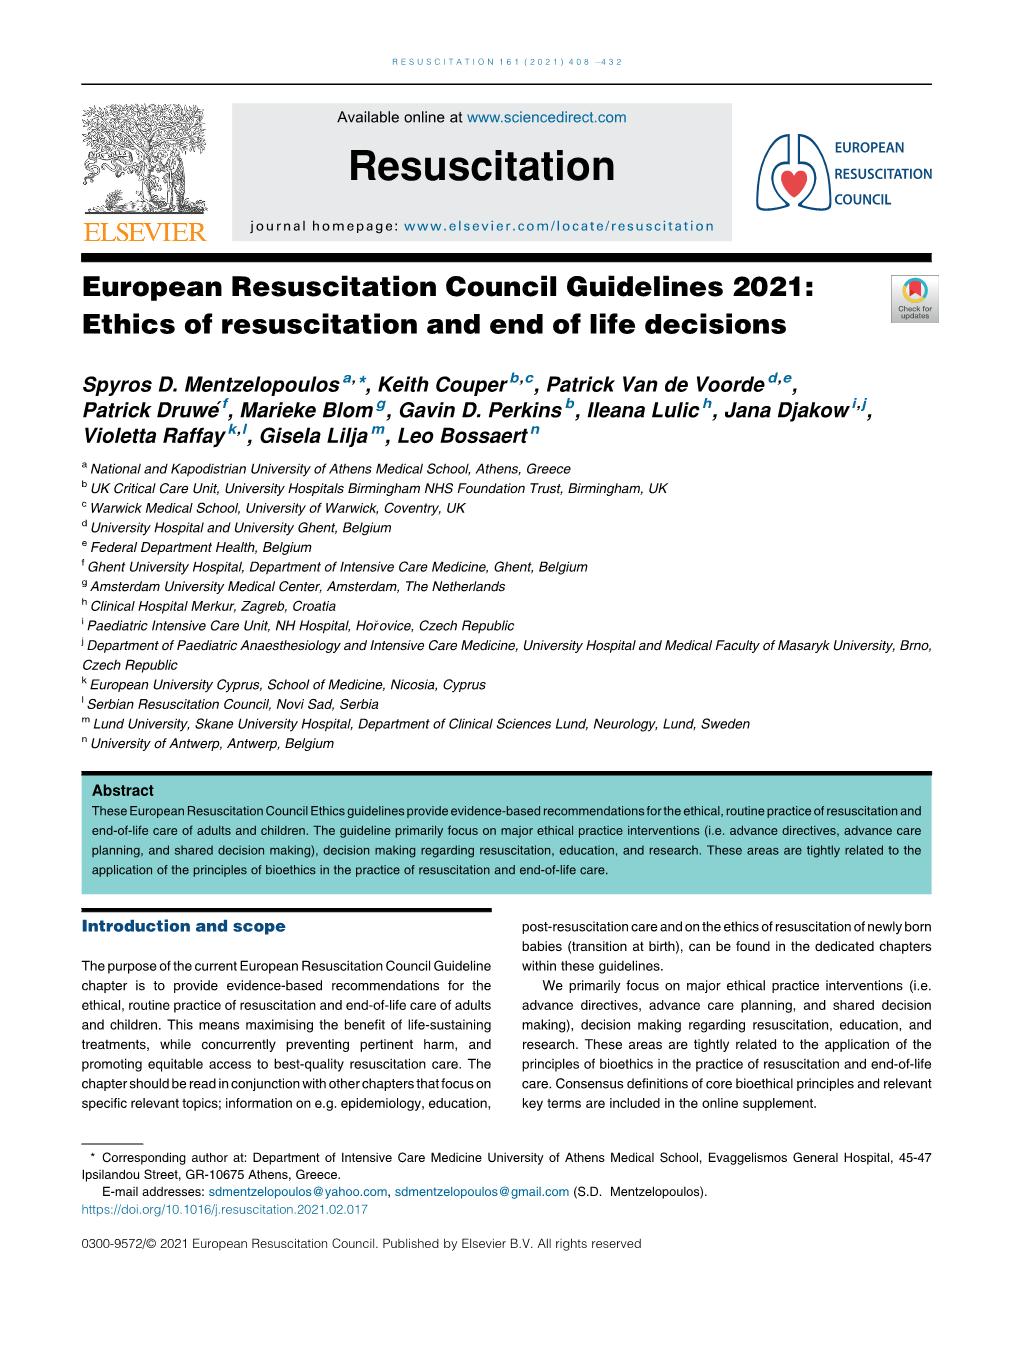 European Resuscitation Council Guidelines 2021